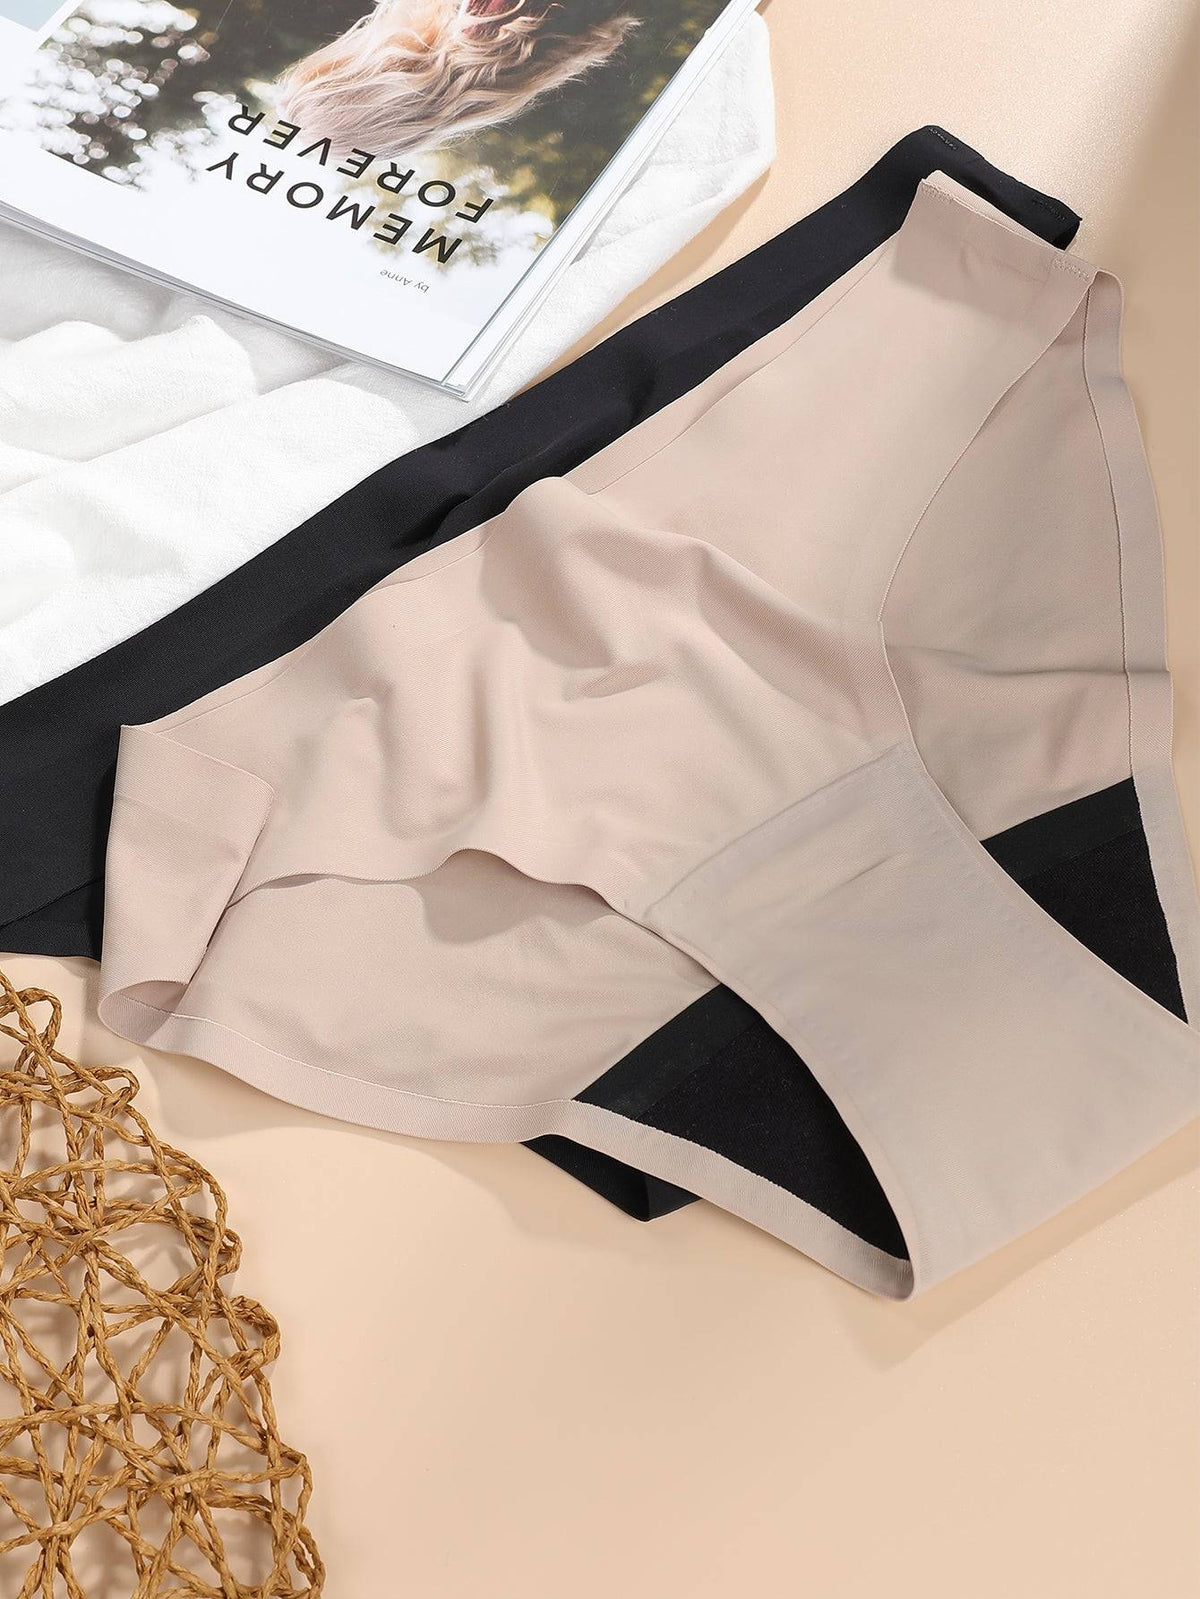 2 Pack Seamless Period Underwear for Women Leak Proof Overnight Menstrual Panties Briefs Sai Feel